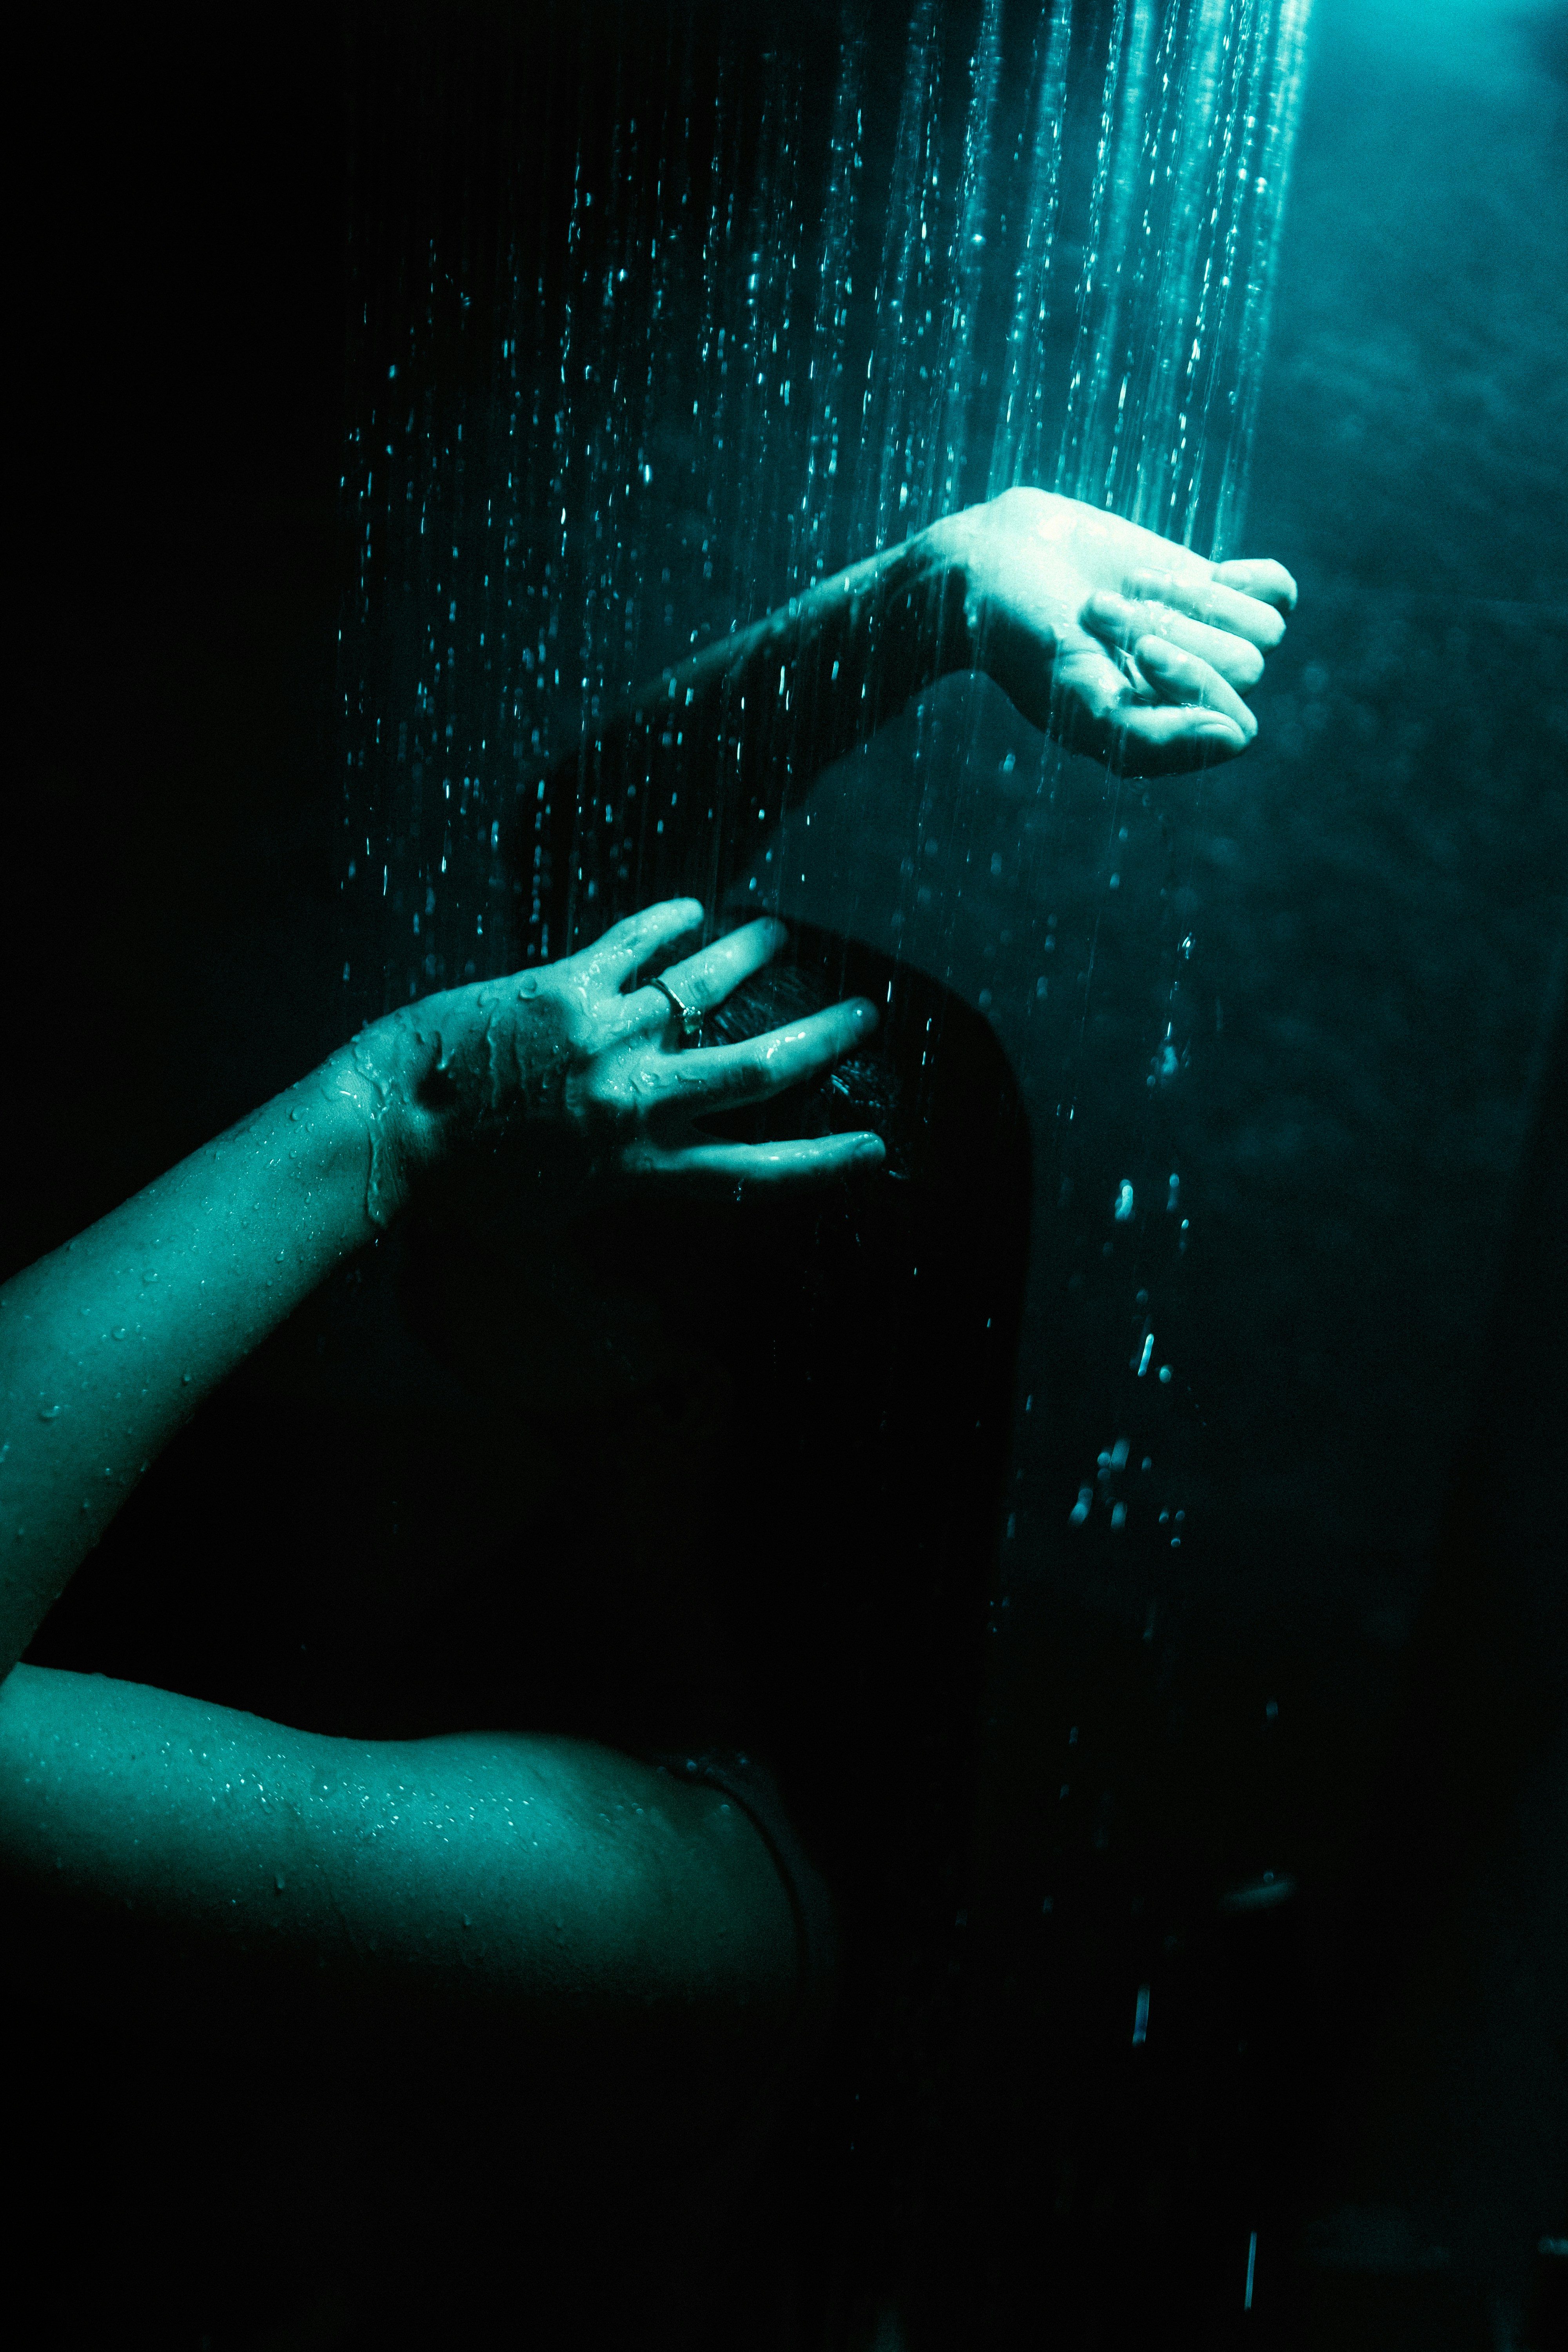 A woman taking a shower | Source: Unsplash